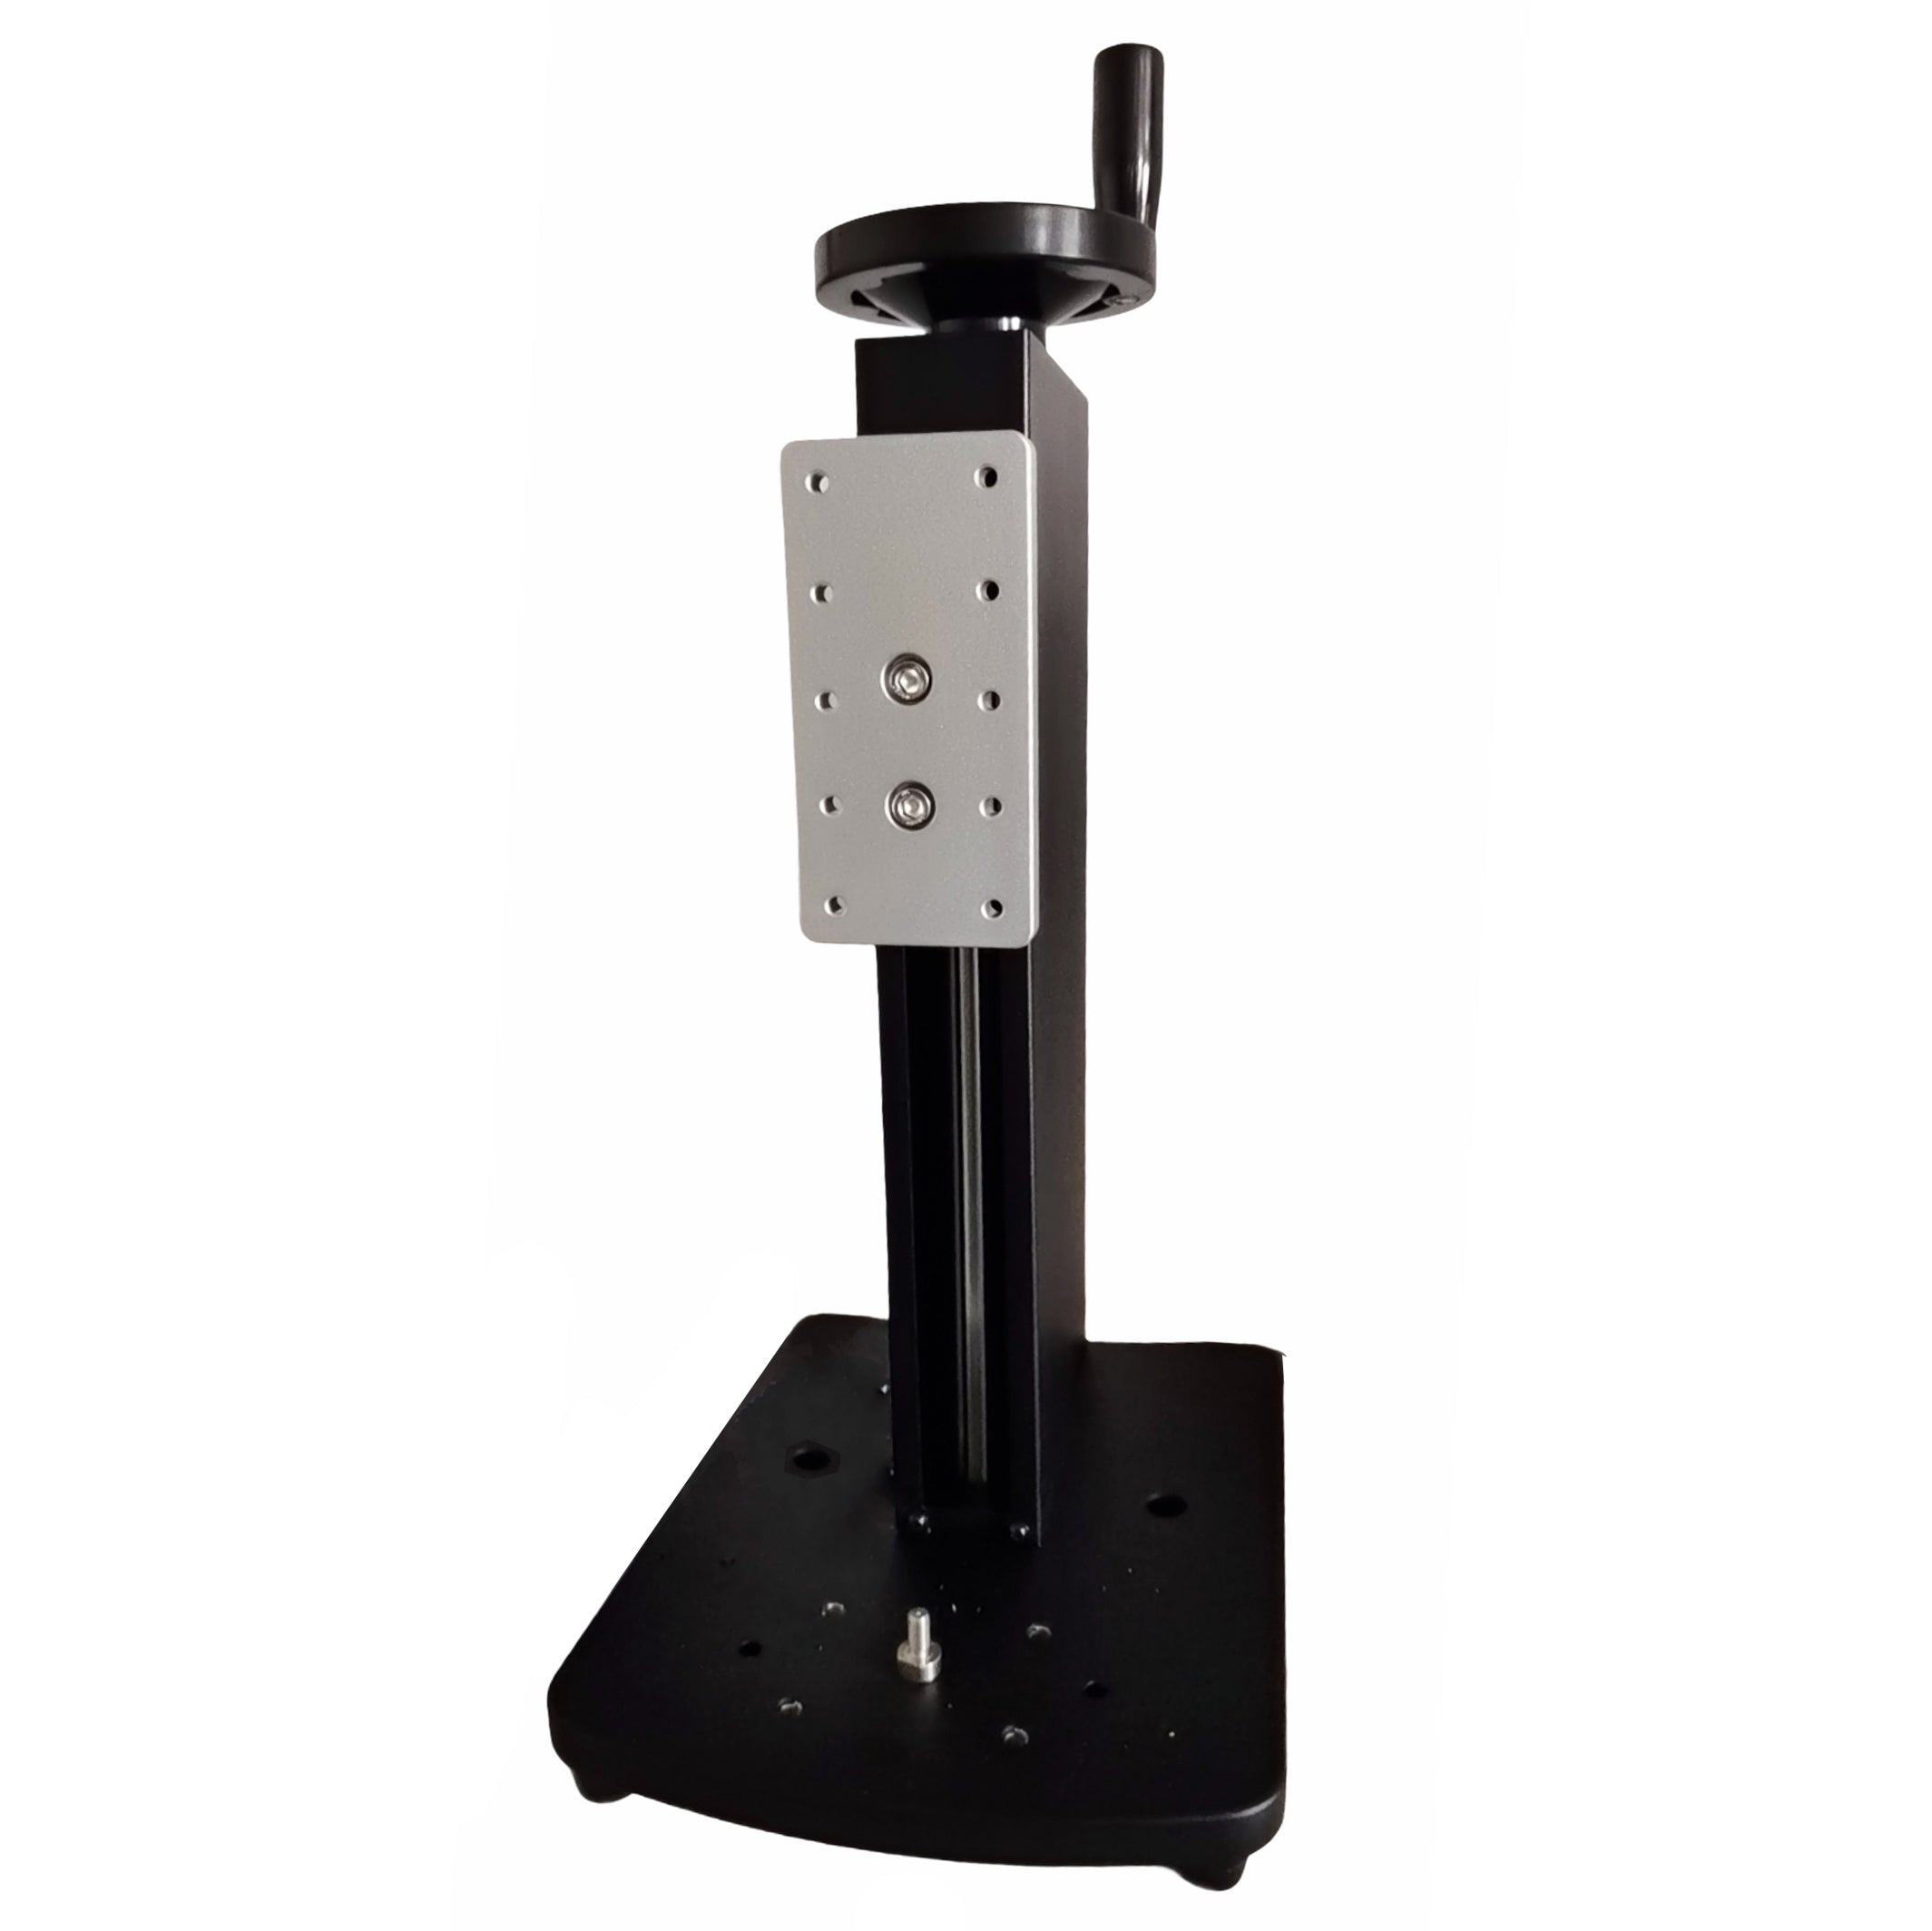 44lbf/200N/20kgf/700ozf/ 20000gf/ EFG Digital Handheld Push Pull Force Gauge with Motorized Force Measurement Test Stand